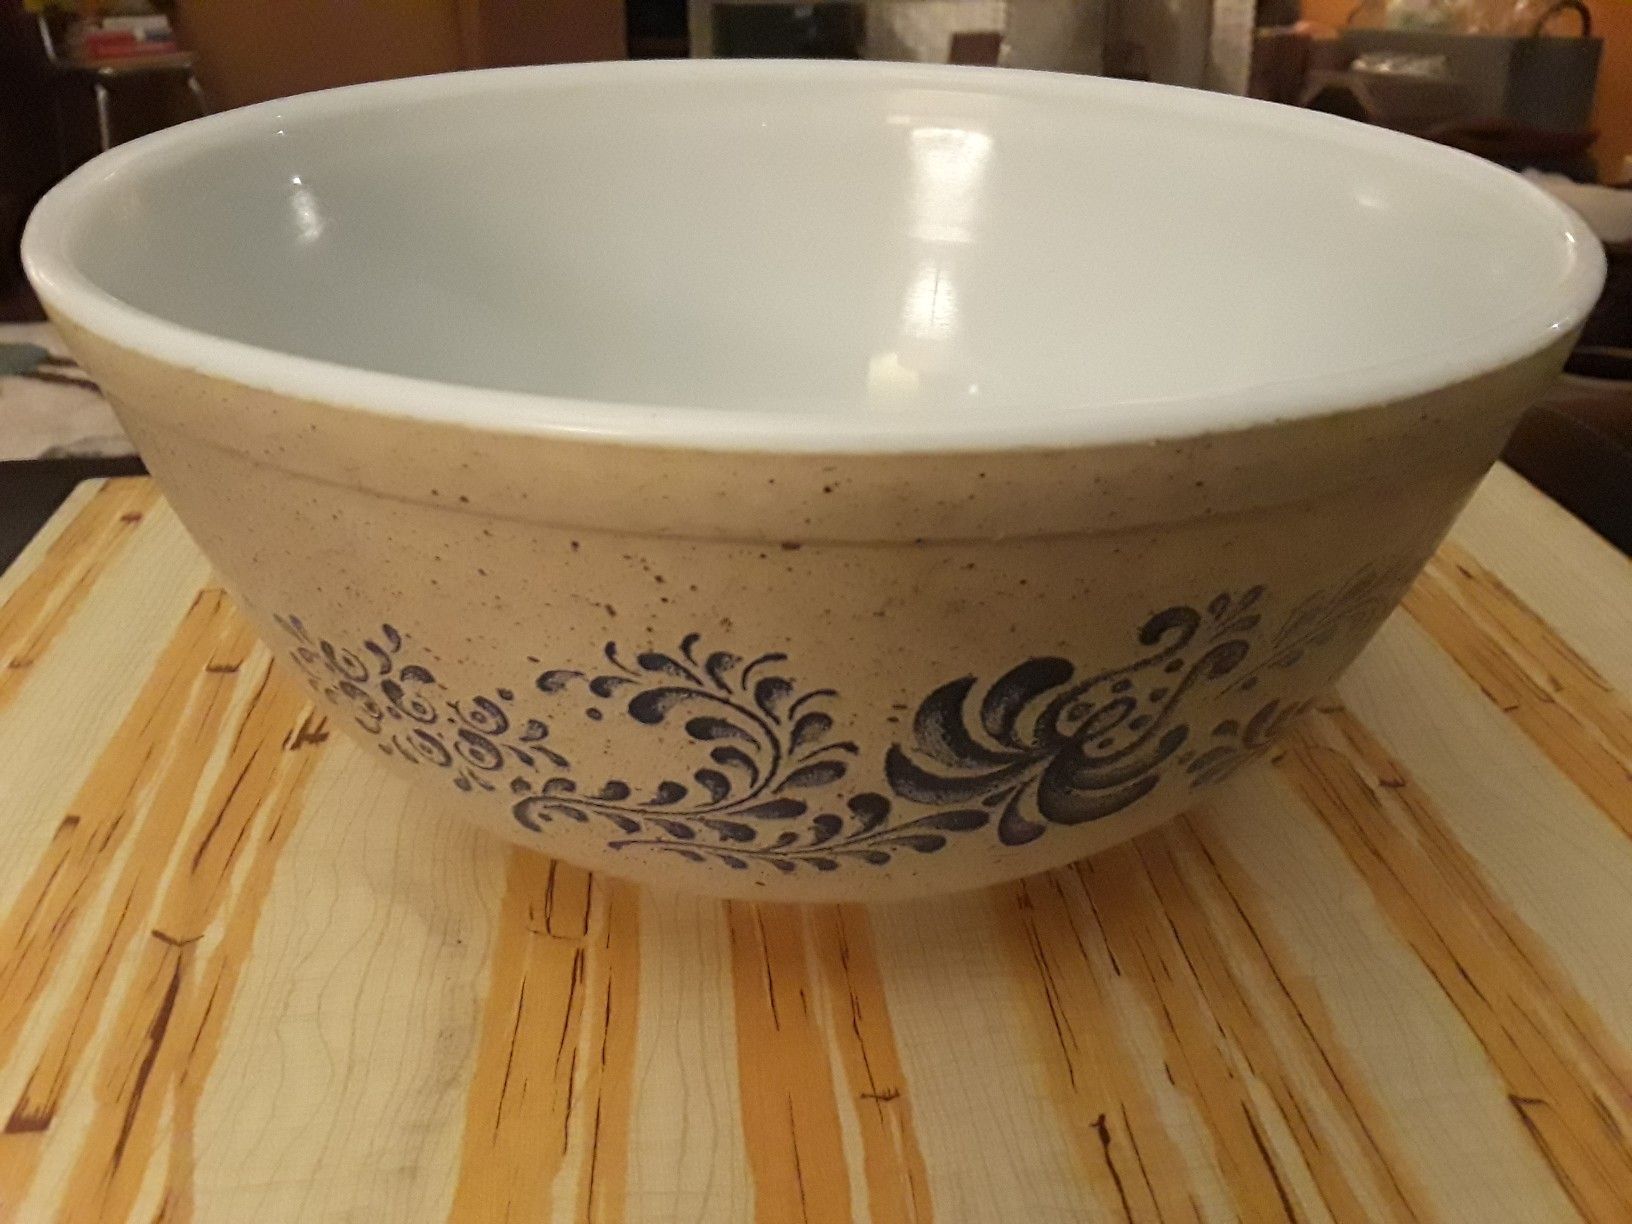 Vintage Pyrex Blue Homestead mixing bowl. 2.5 qt bowl, blue homestead 403